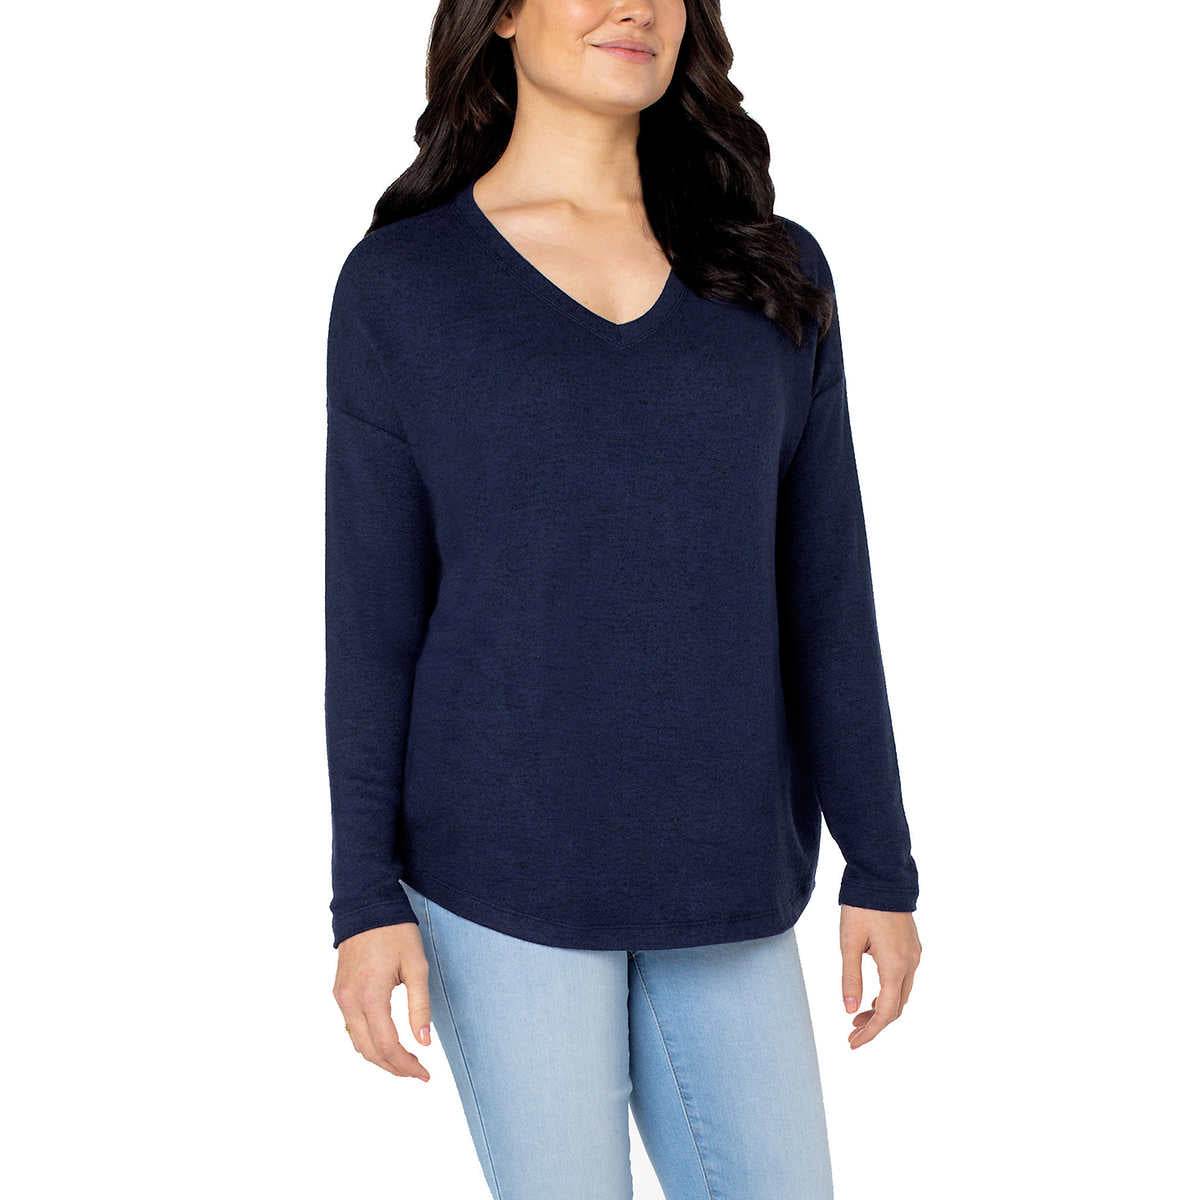 Well Worn Women's Ultra Soft V-neck Lightweight Knit Sweater Relaxed Fit Top